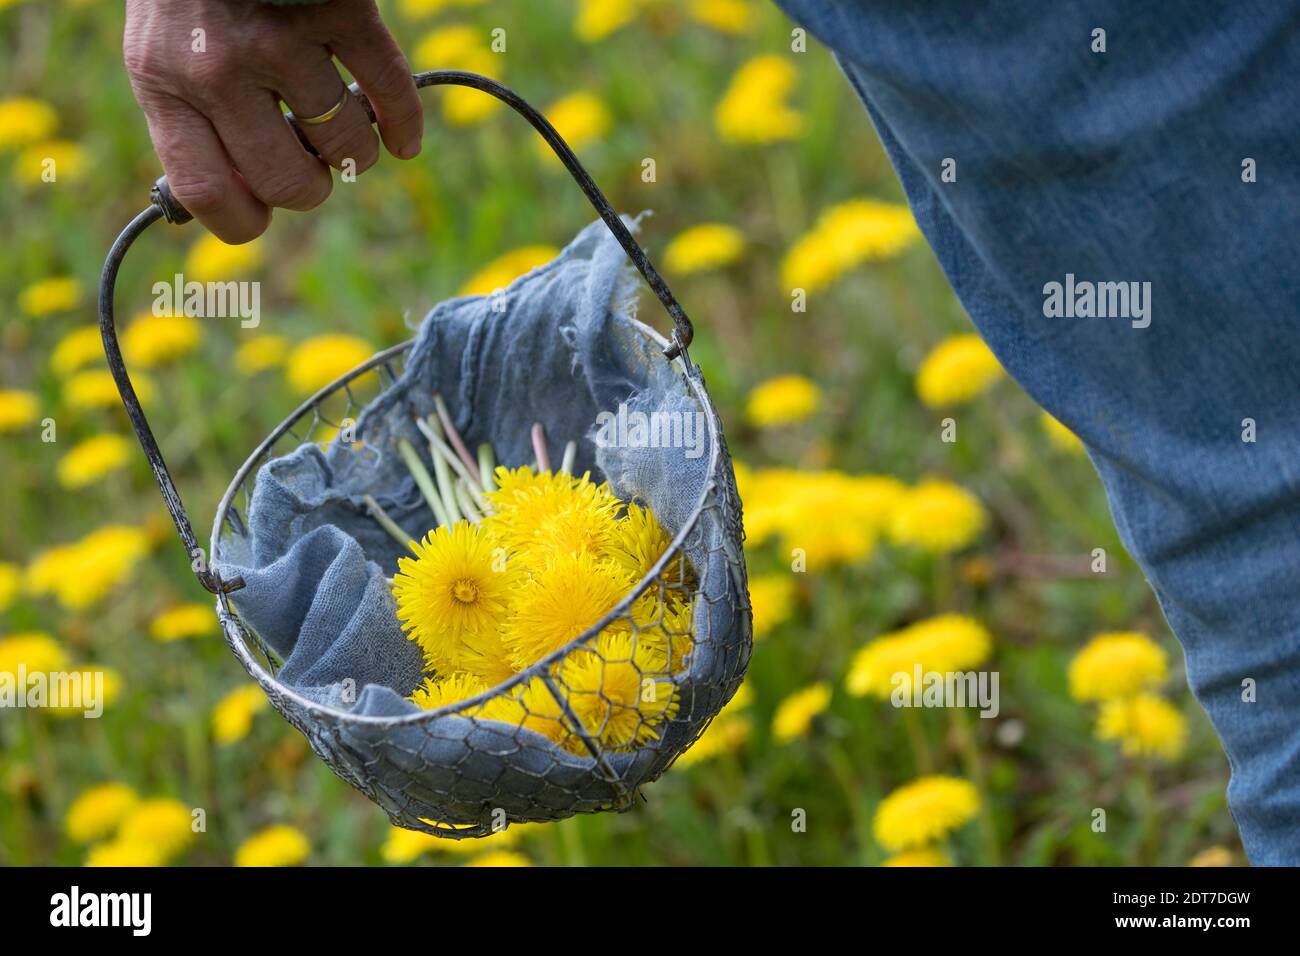 common dandelion (Taraxacum officinale), harvesting of dandelion flowers in a basket, Germany Stock Photo